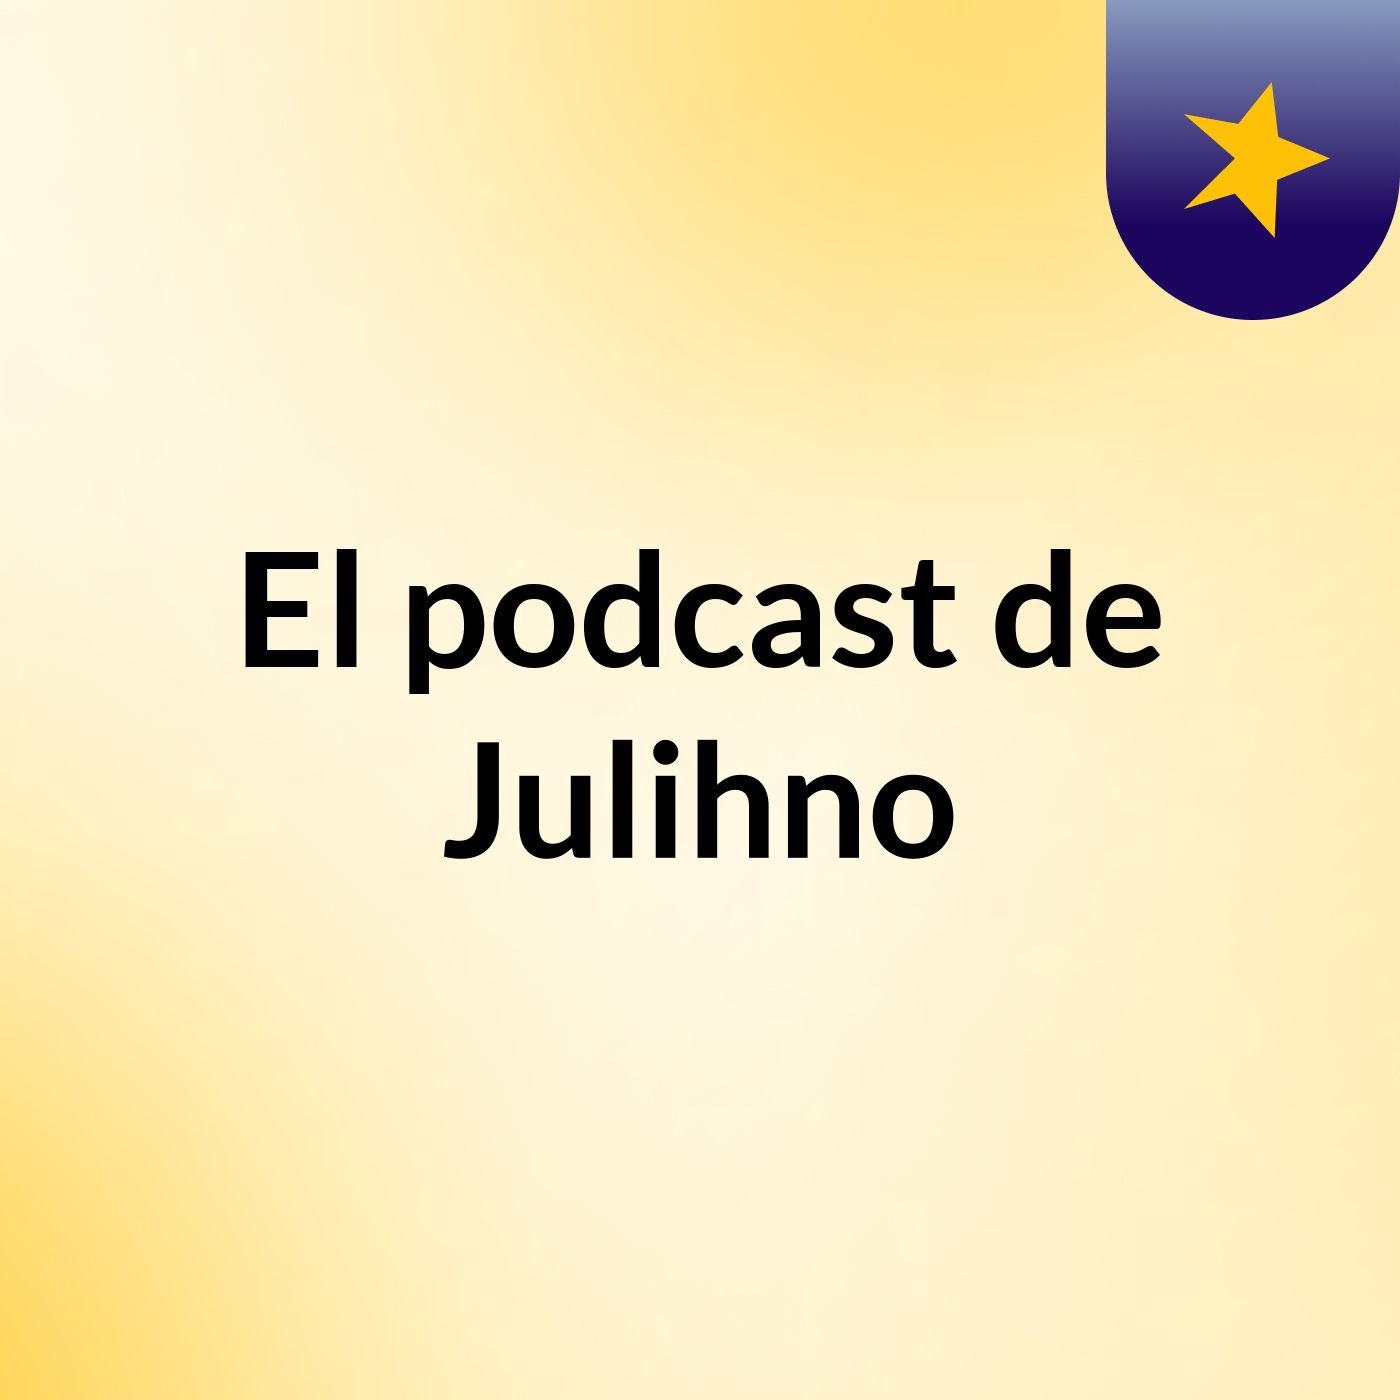 Episodio 6 - El podcast de Julihno